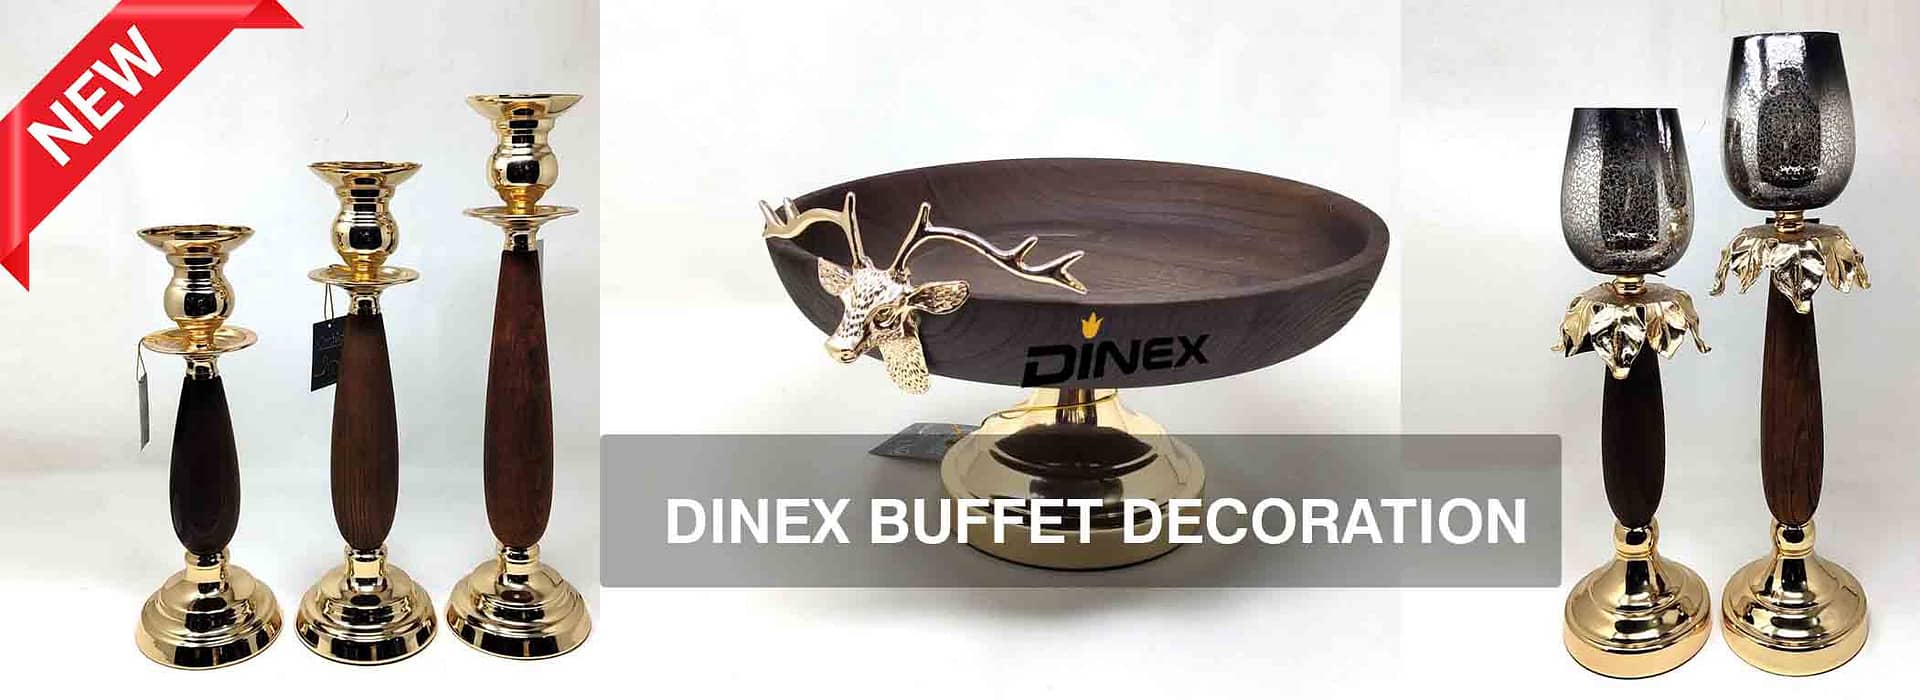 buffet decoration dinex